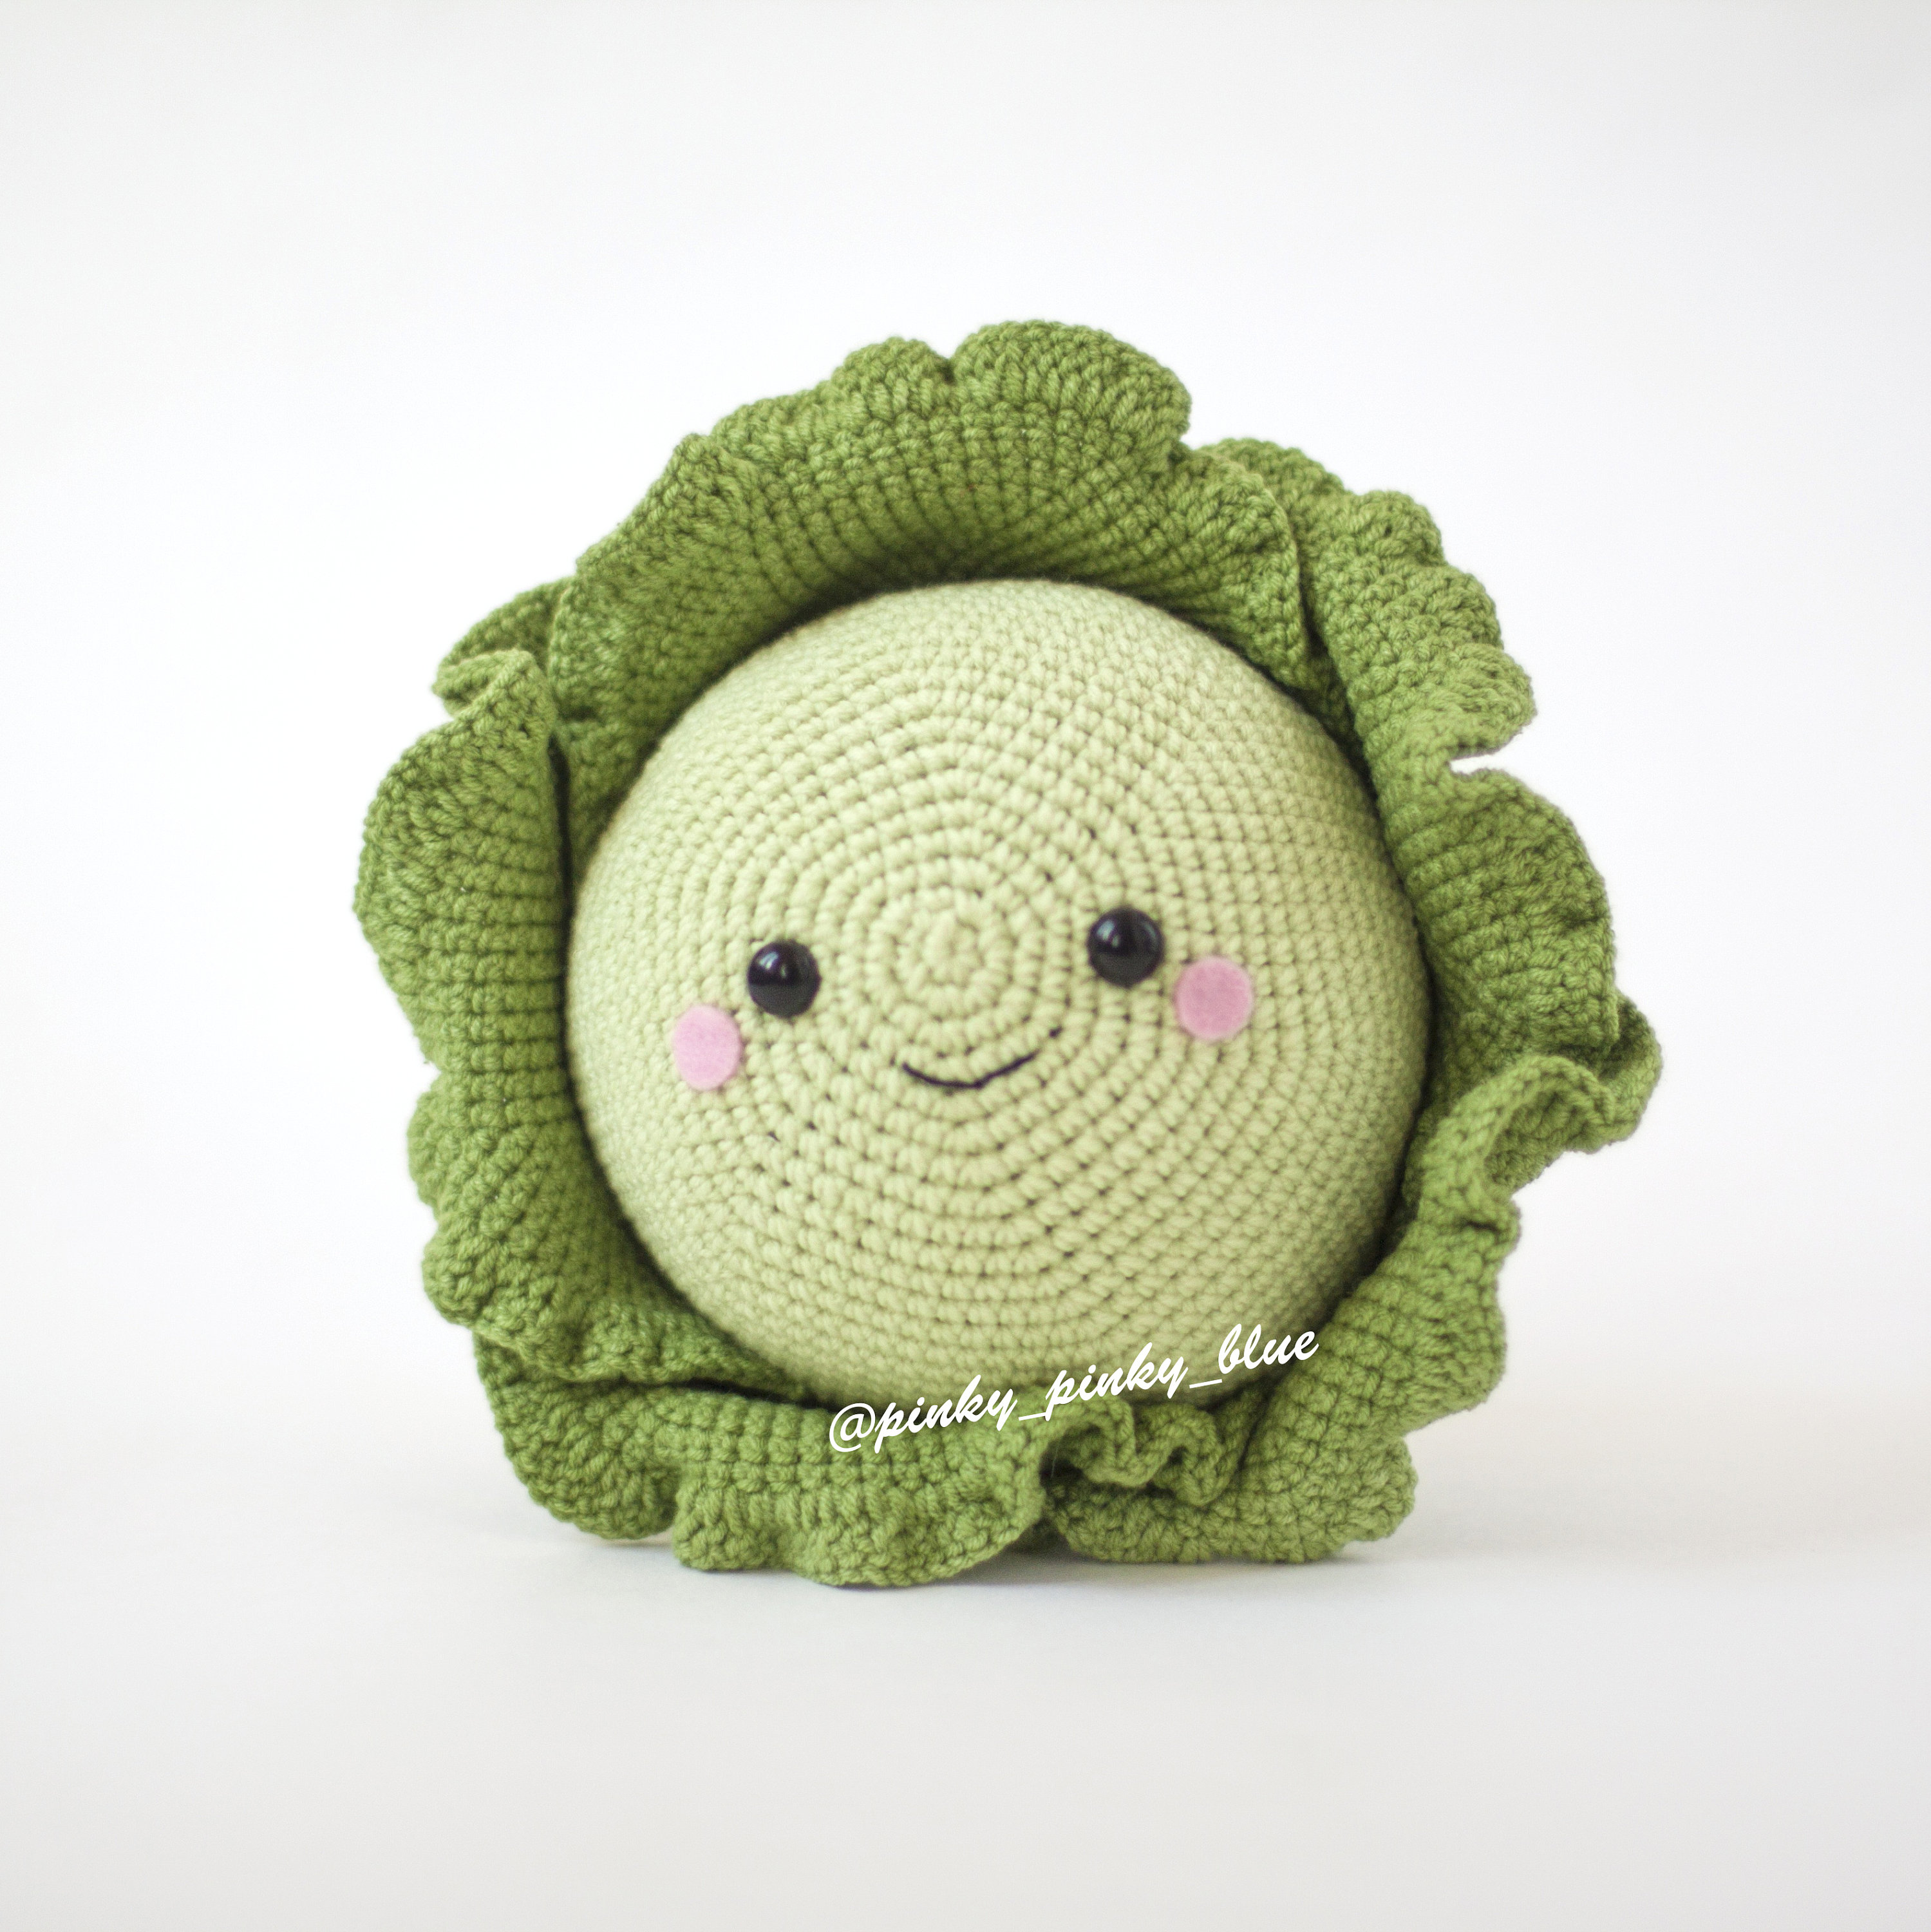 16 in 1 Vegetables Crochet Pattern | Etsy